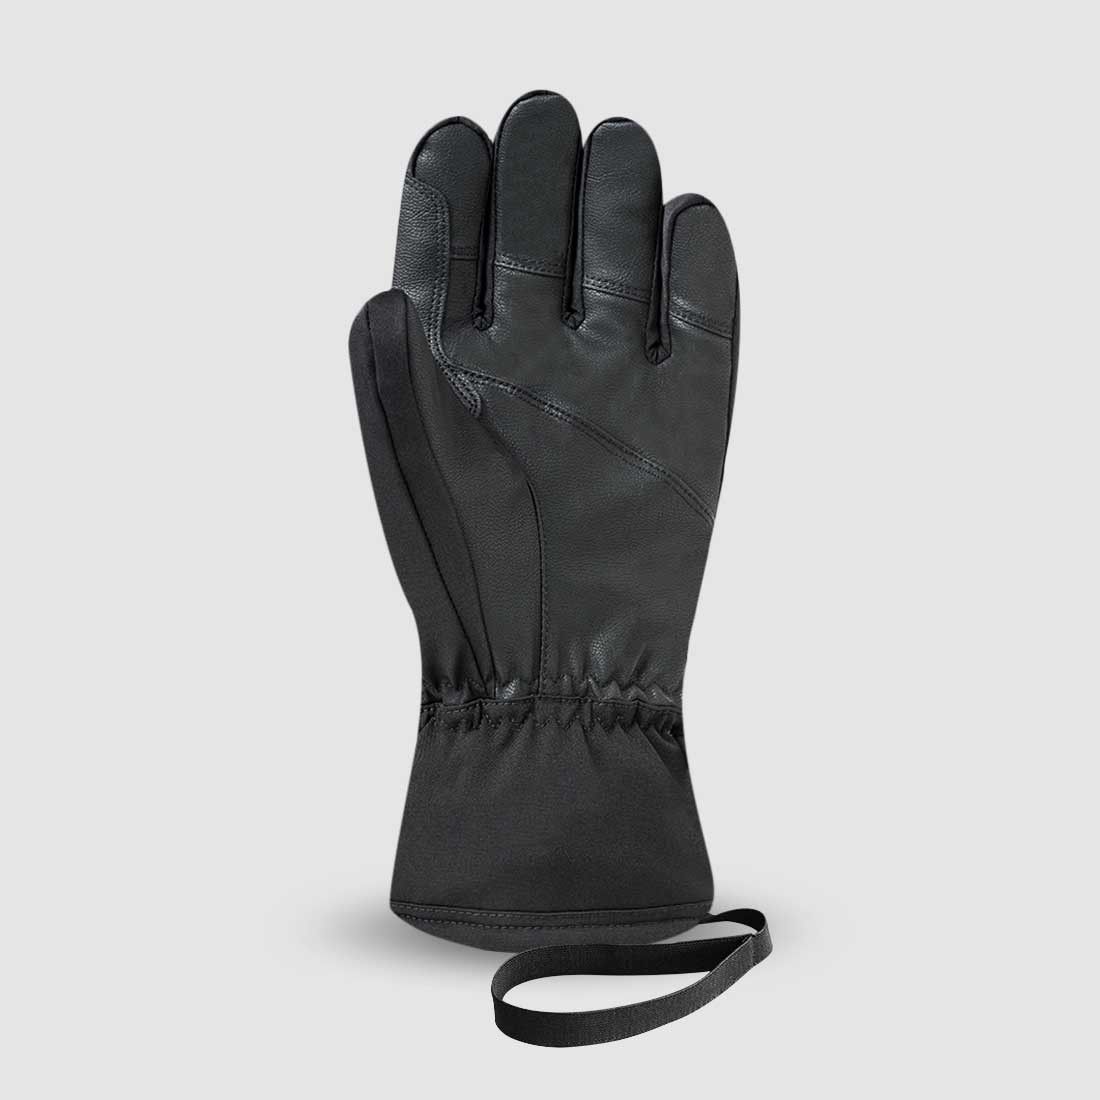 IWARM GTX - Heated Gloves